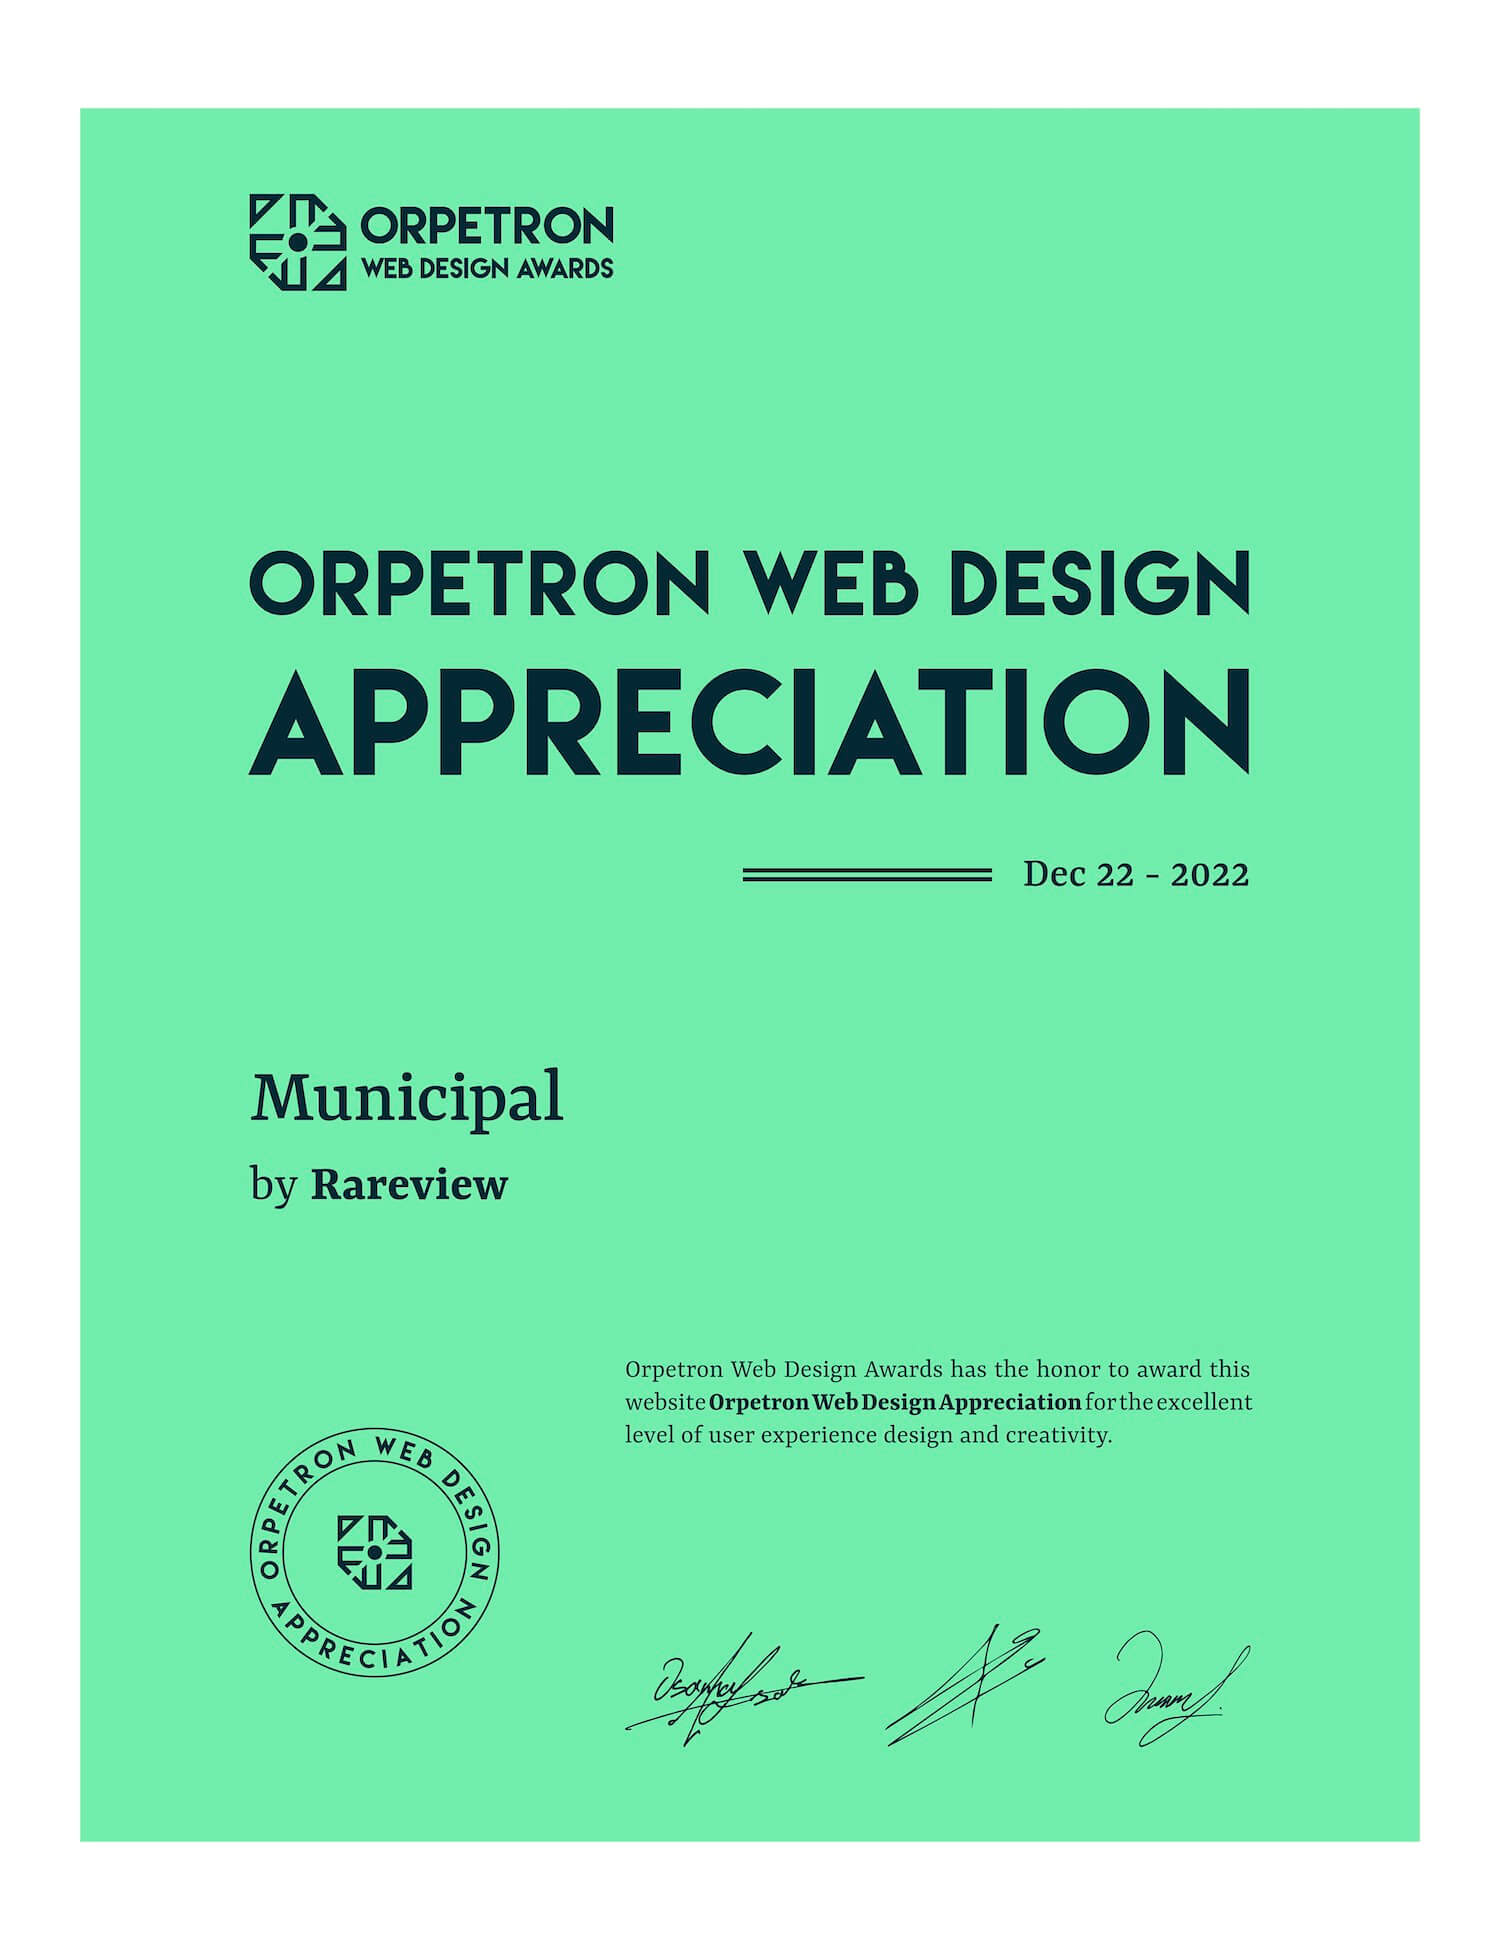 The Orpetron Web Design Appreciation certificate